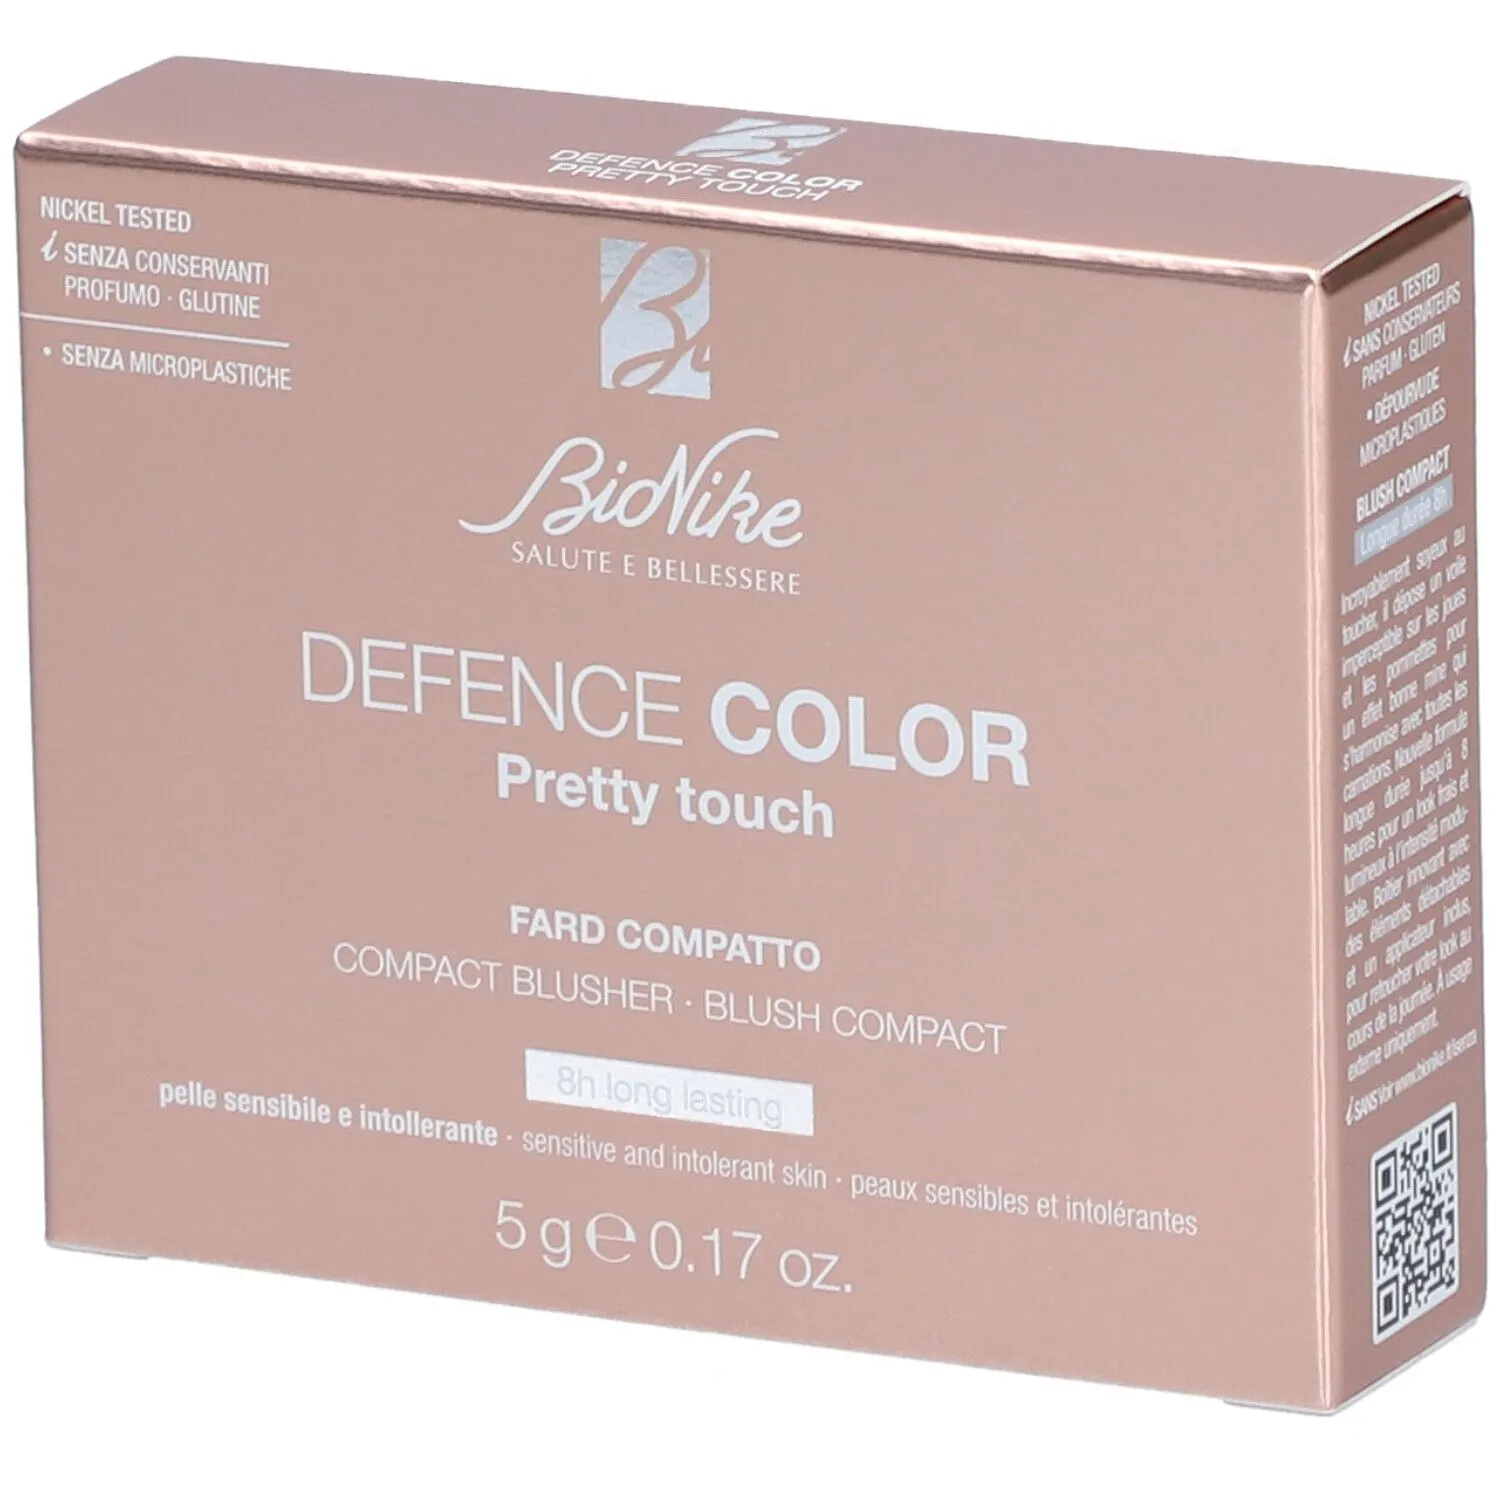 BioNike DEFENCE COLOR PRETTY TOUCH COMPACT BLUSHER 302 PECHE 5 g fond(s) de teint